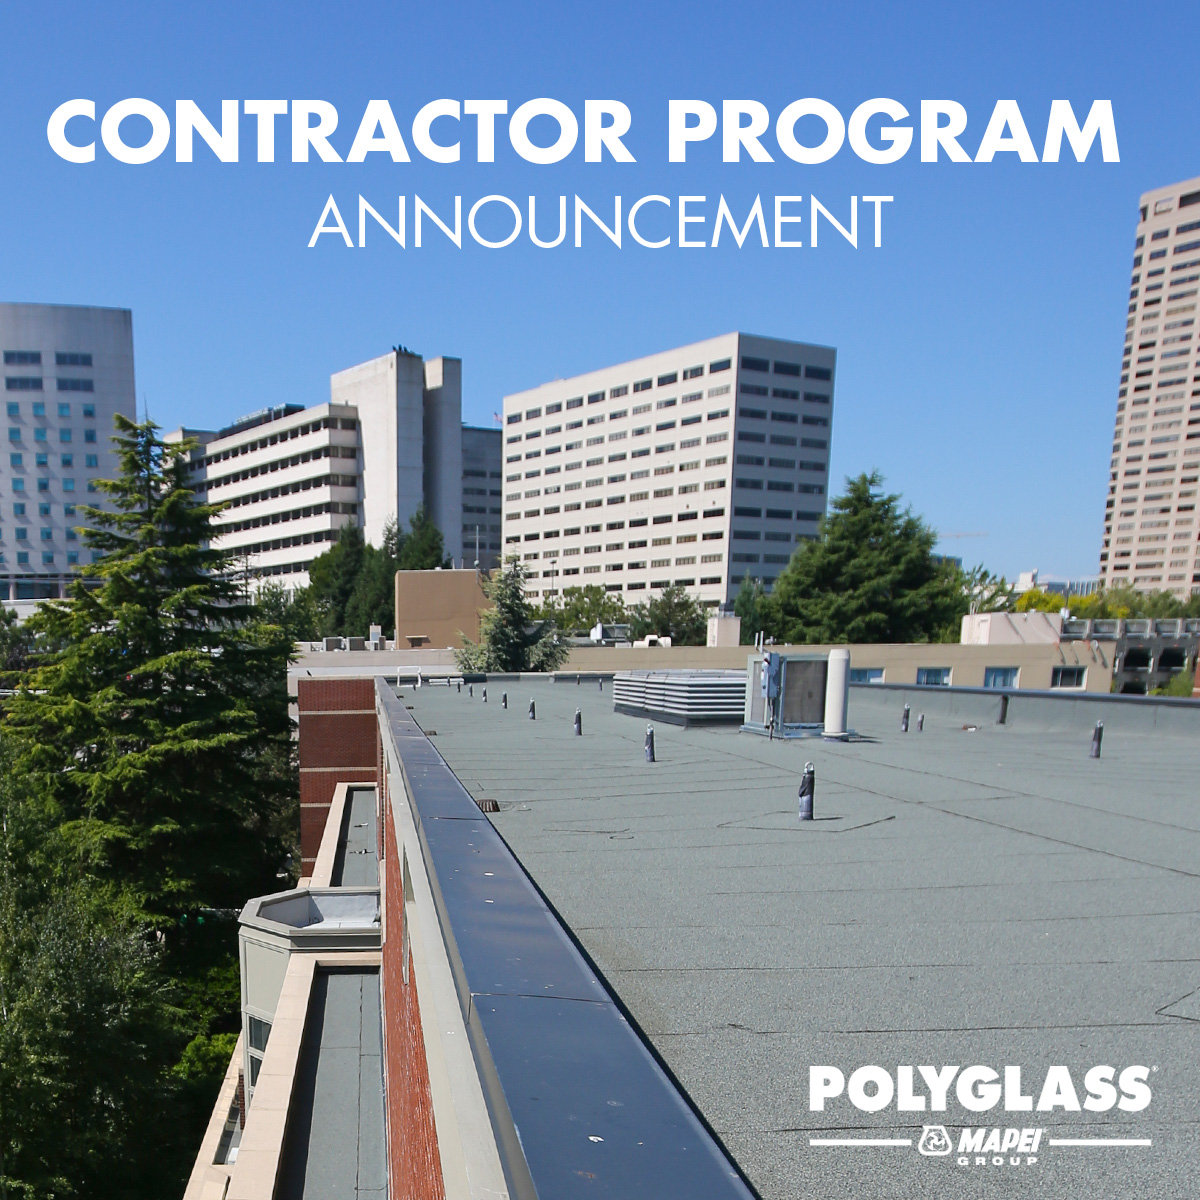 Polyglass Announces Their Contractor Program Update - Polyglass U.S.A ...